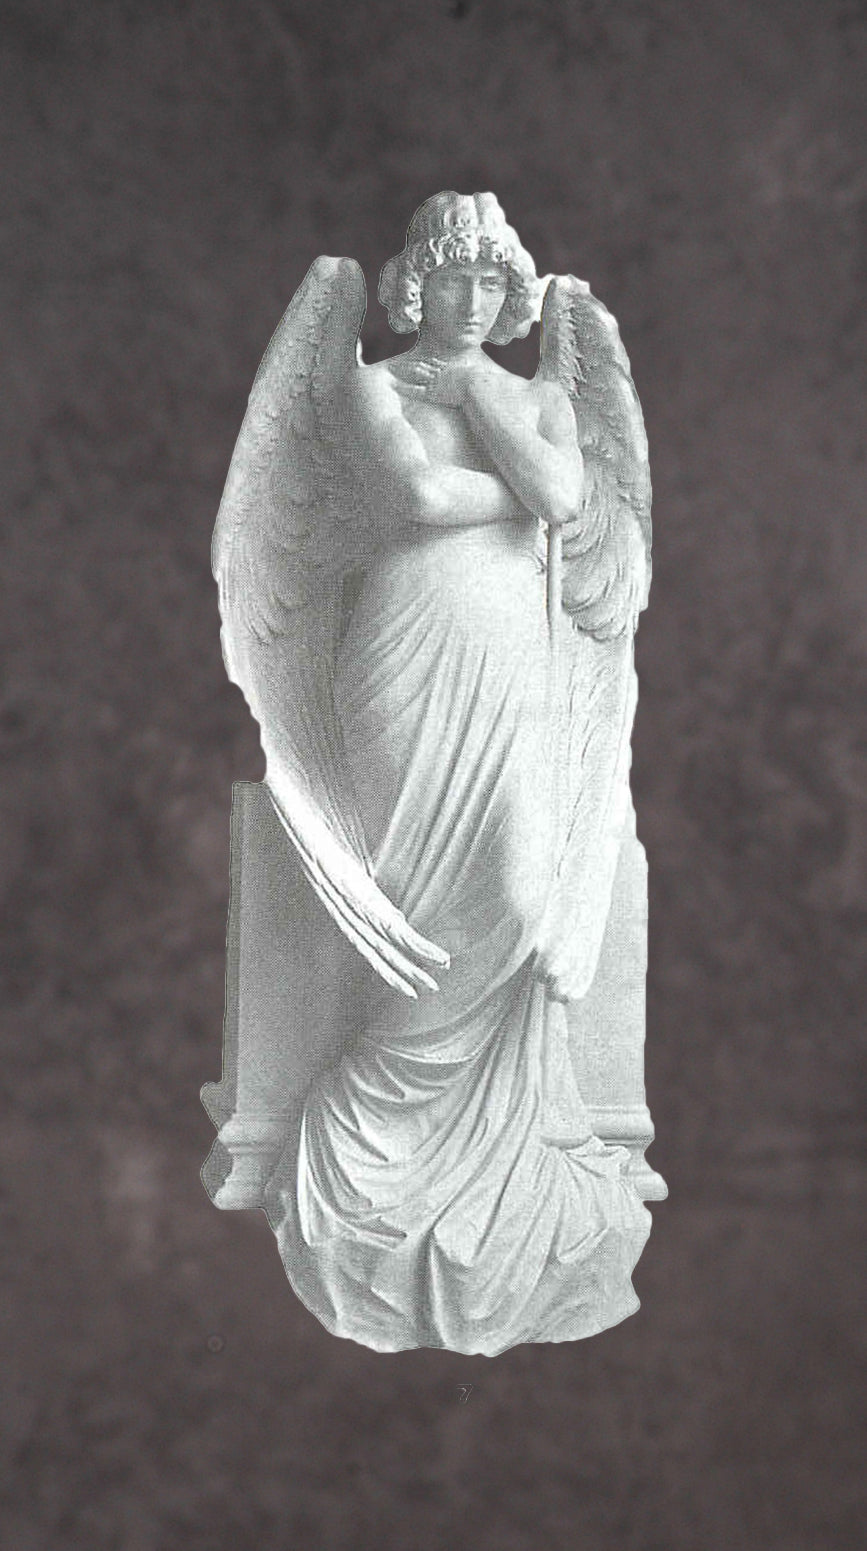 Male Angel Italian Marble Sculpture - 12”H